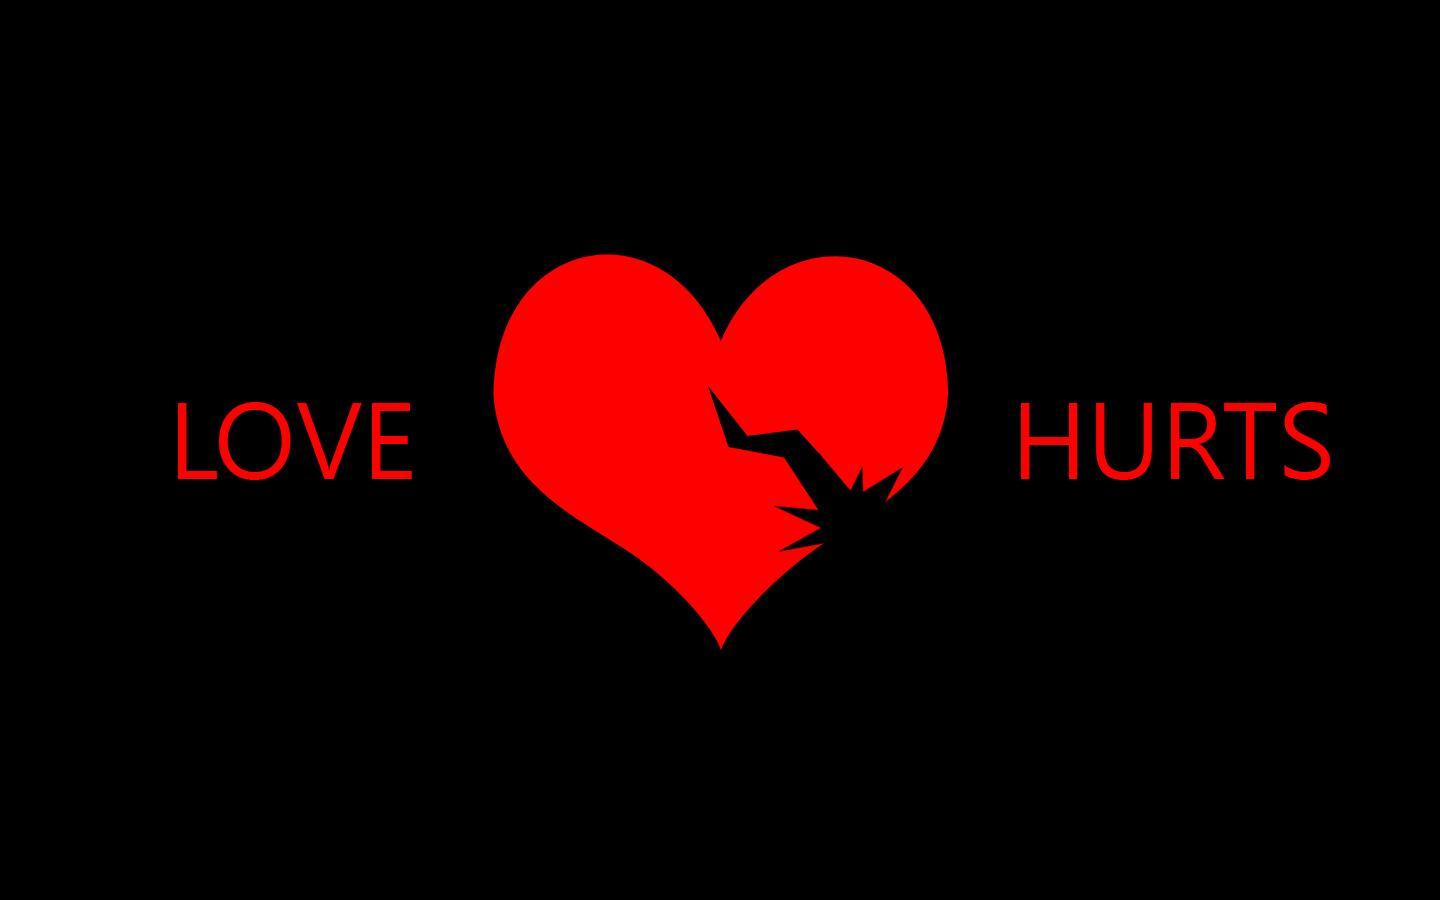 Wallpaper For > Love Hurts Wallpaper For Facebook